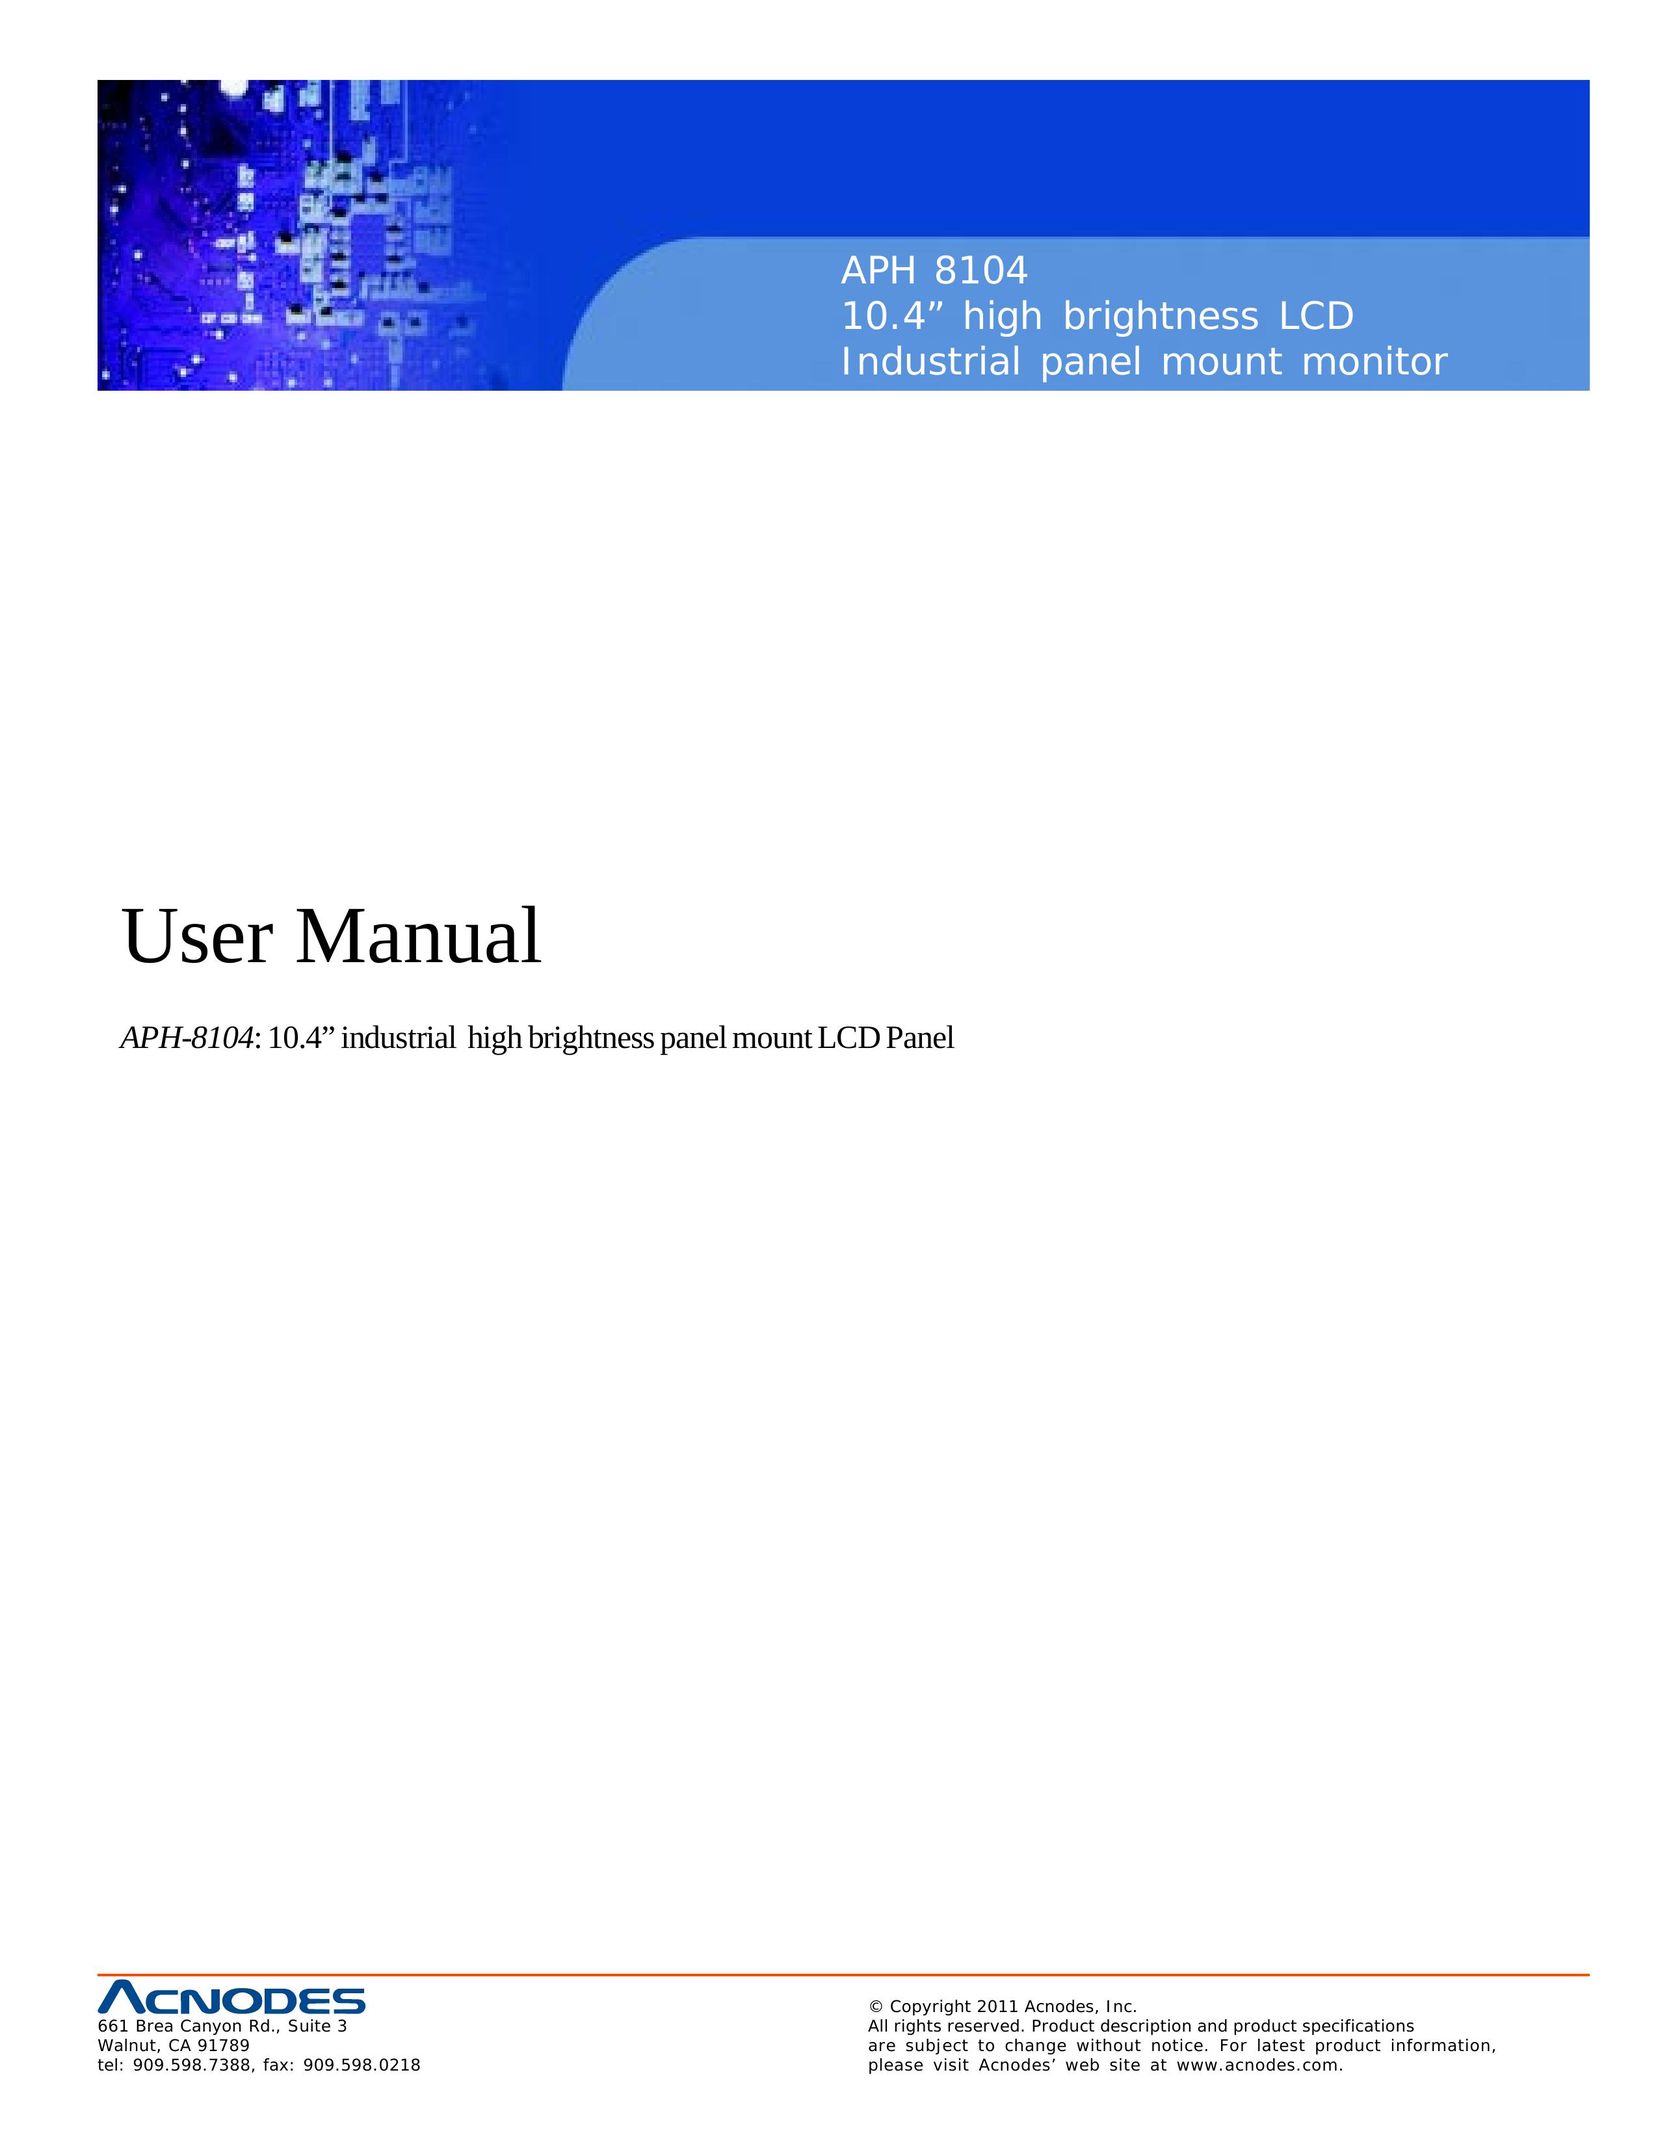 Acnodes APH 8104 Computer Monitor User Manual